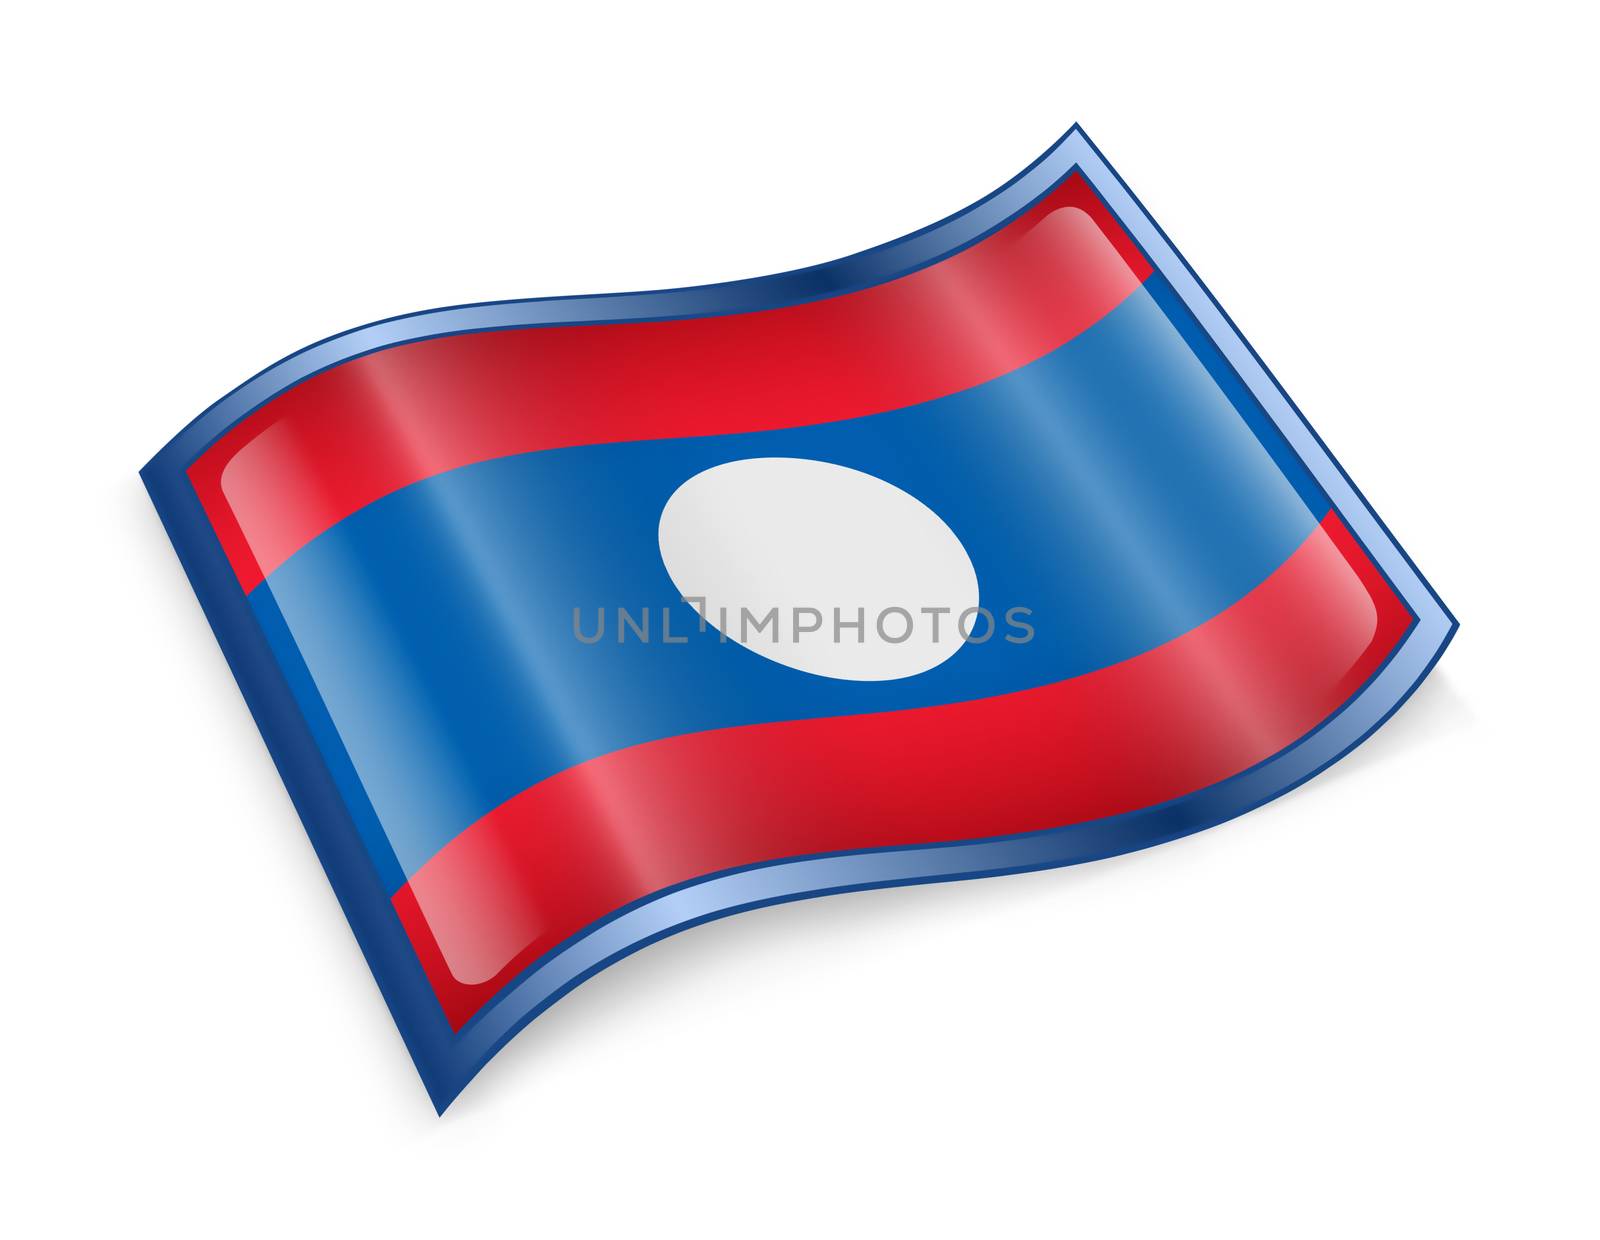 Laos Flag icon, isolated on white background.